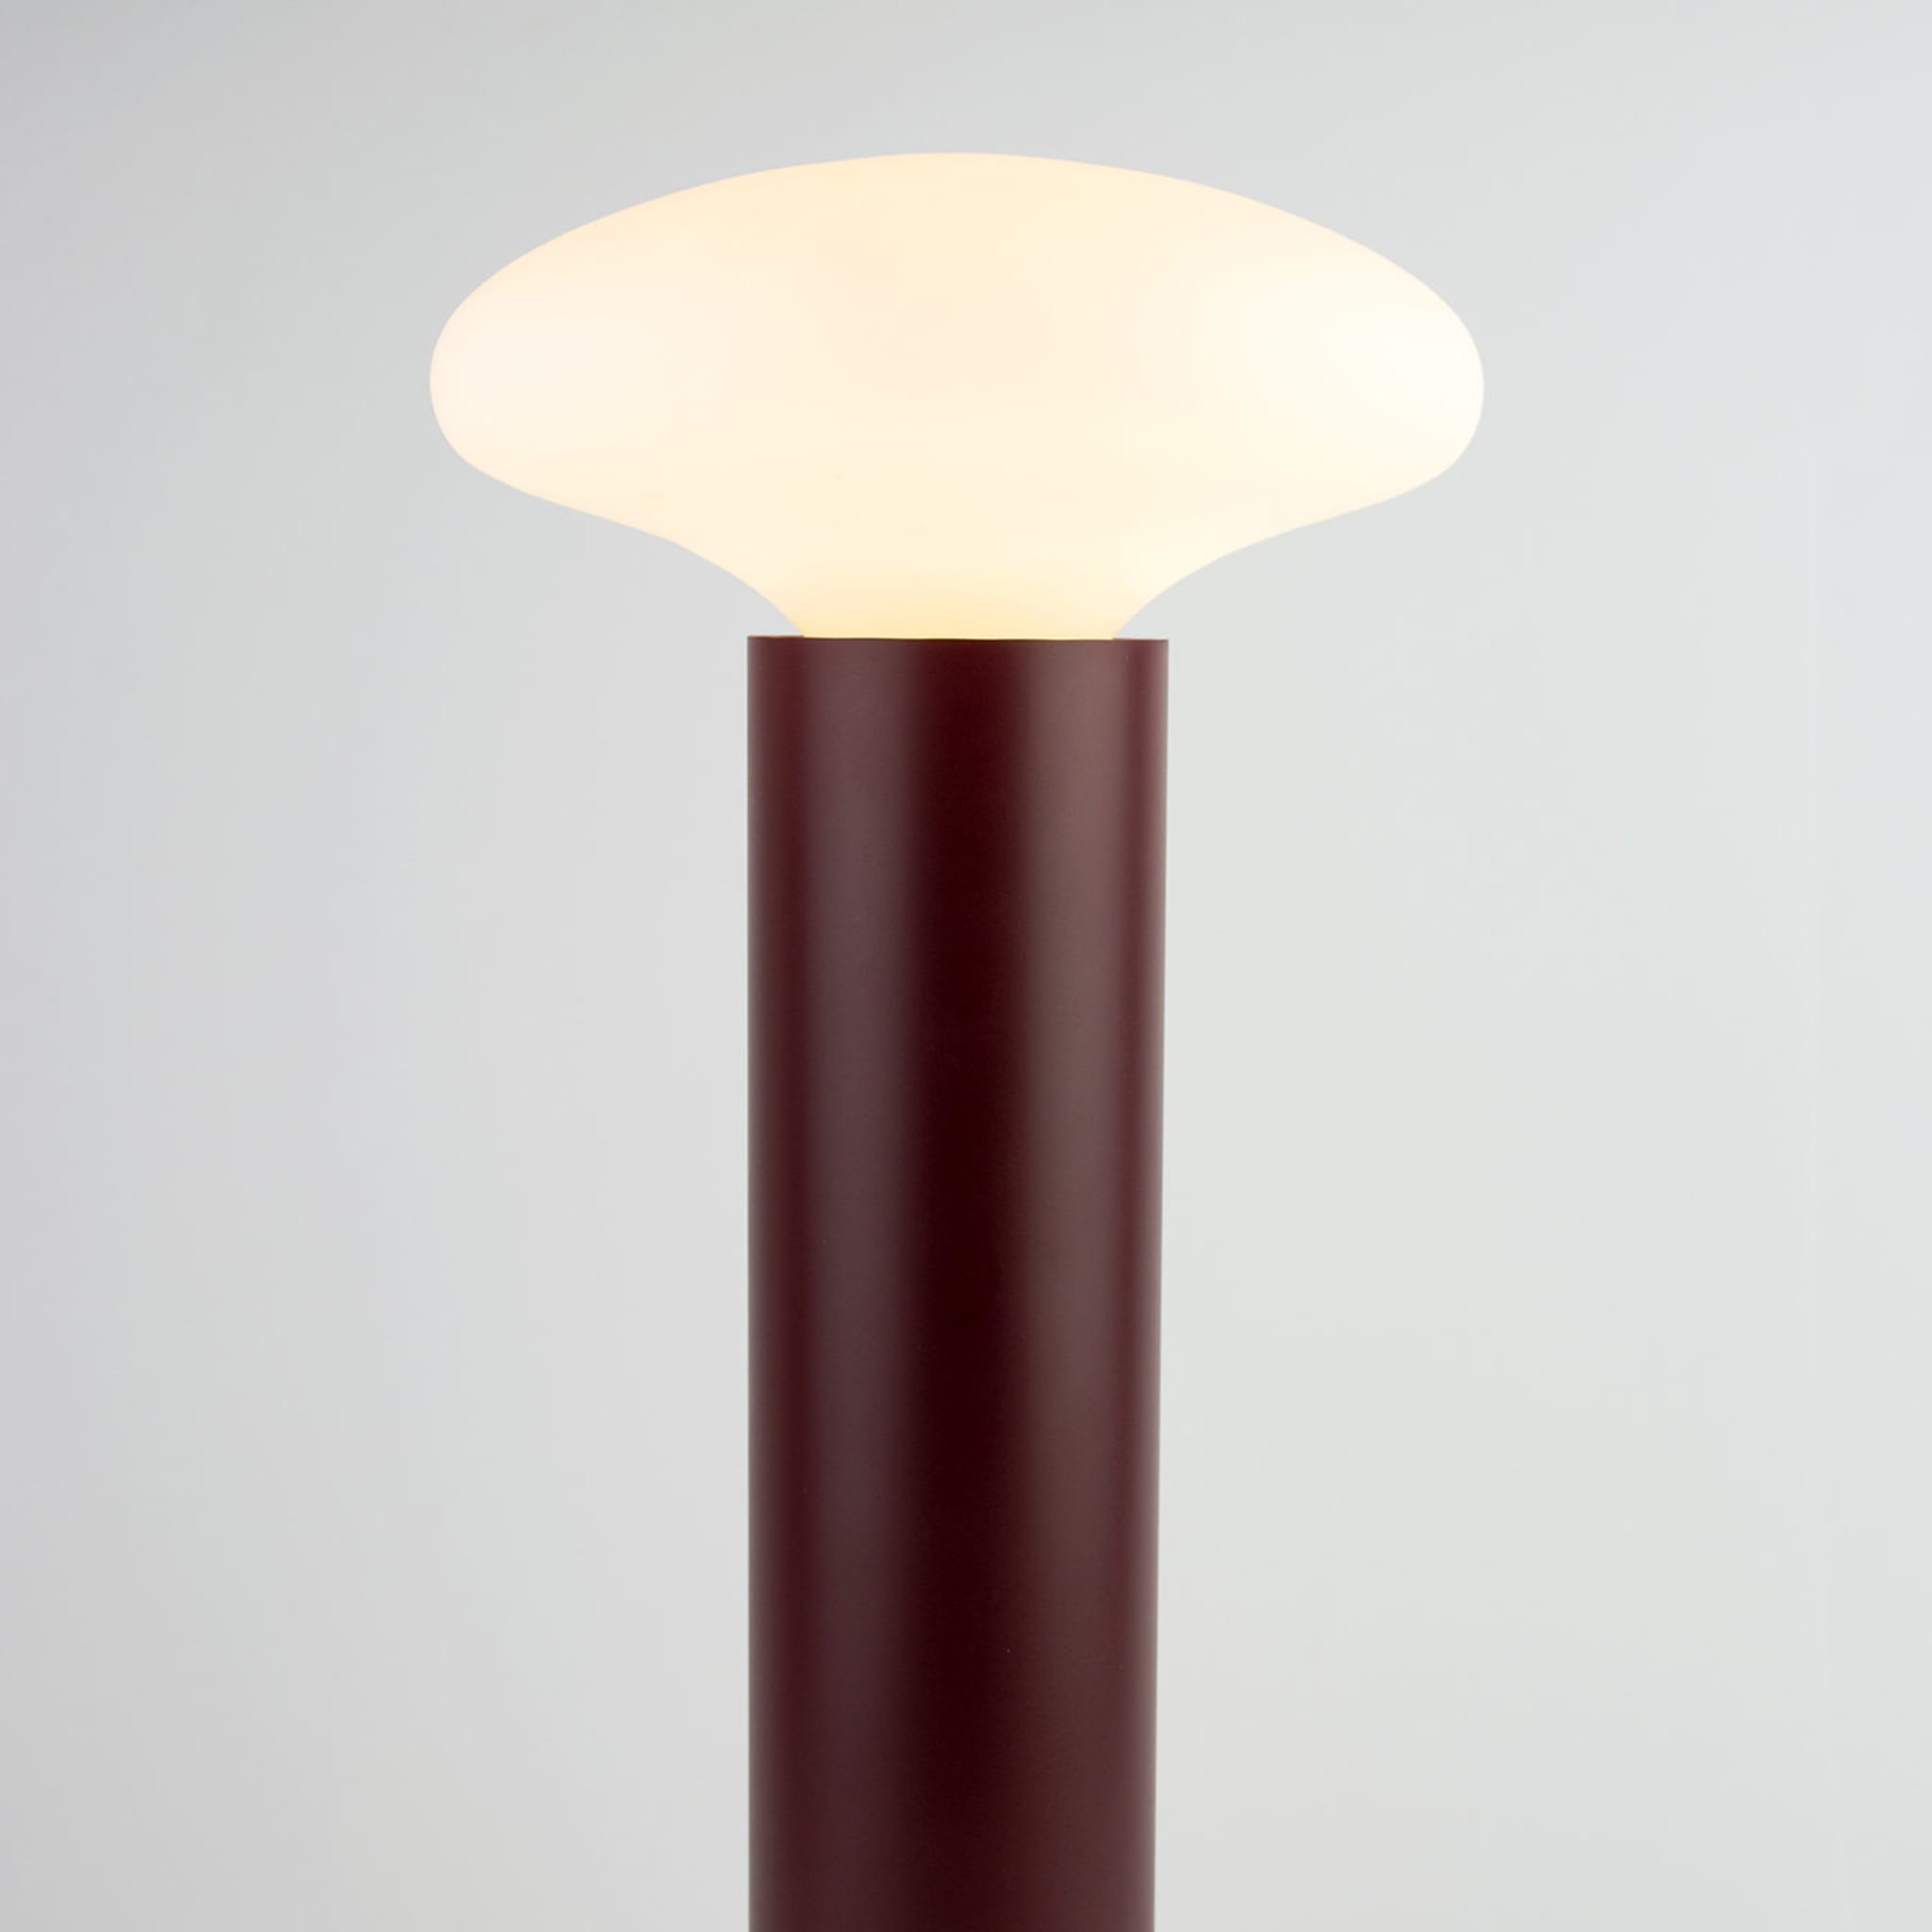 Stem Floor Lamp by Alalda Design - Alternative view 2